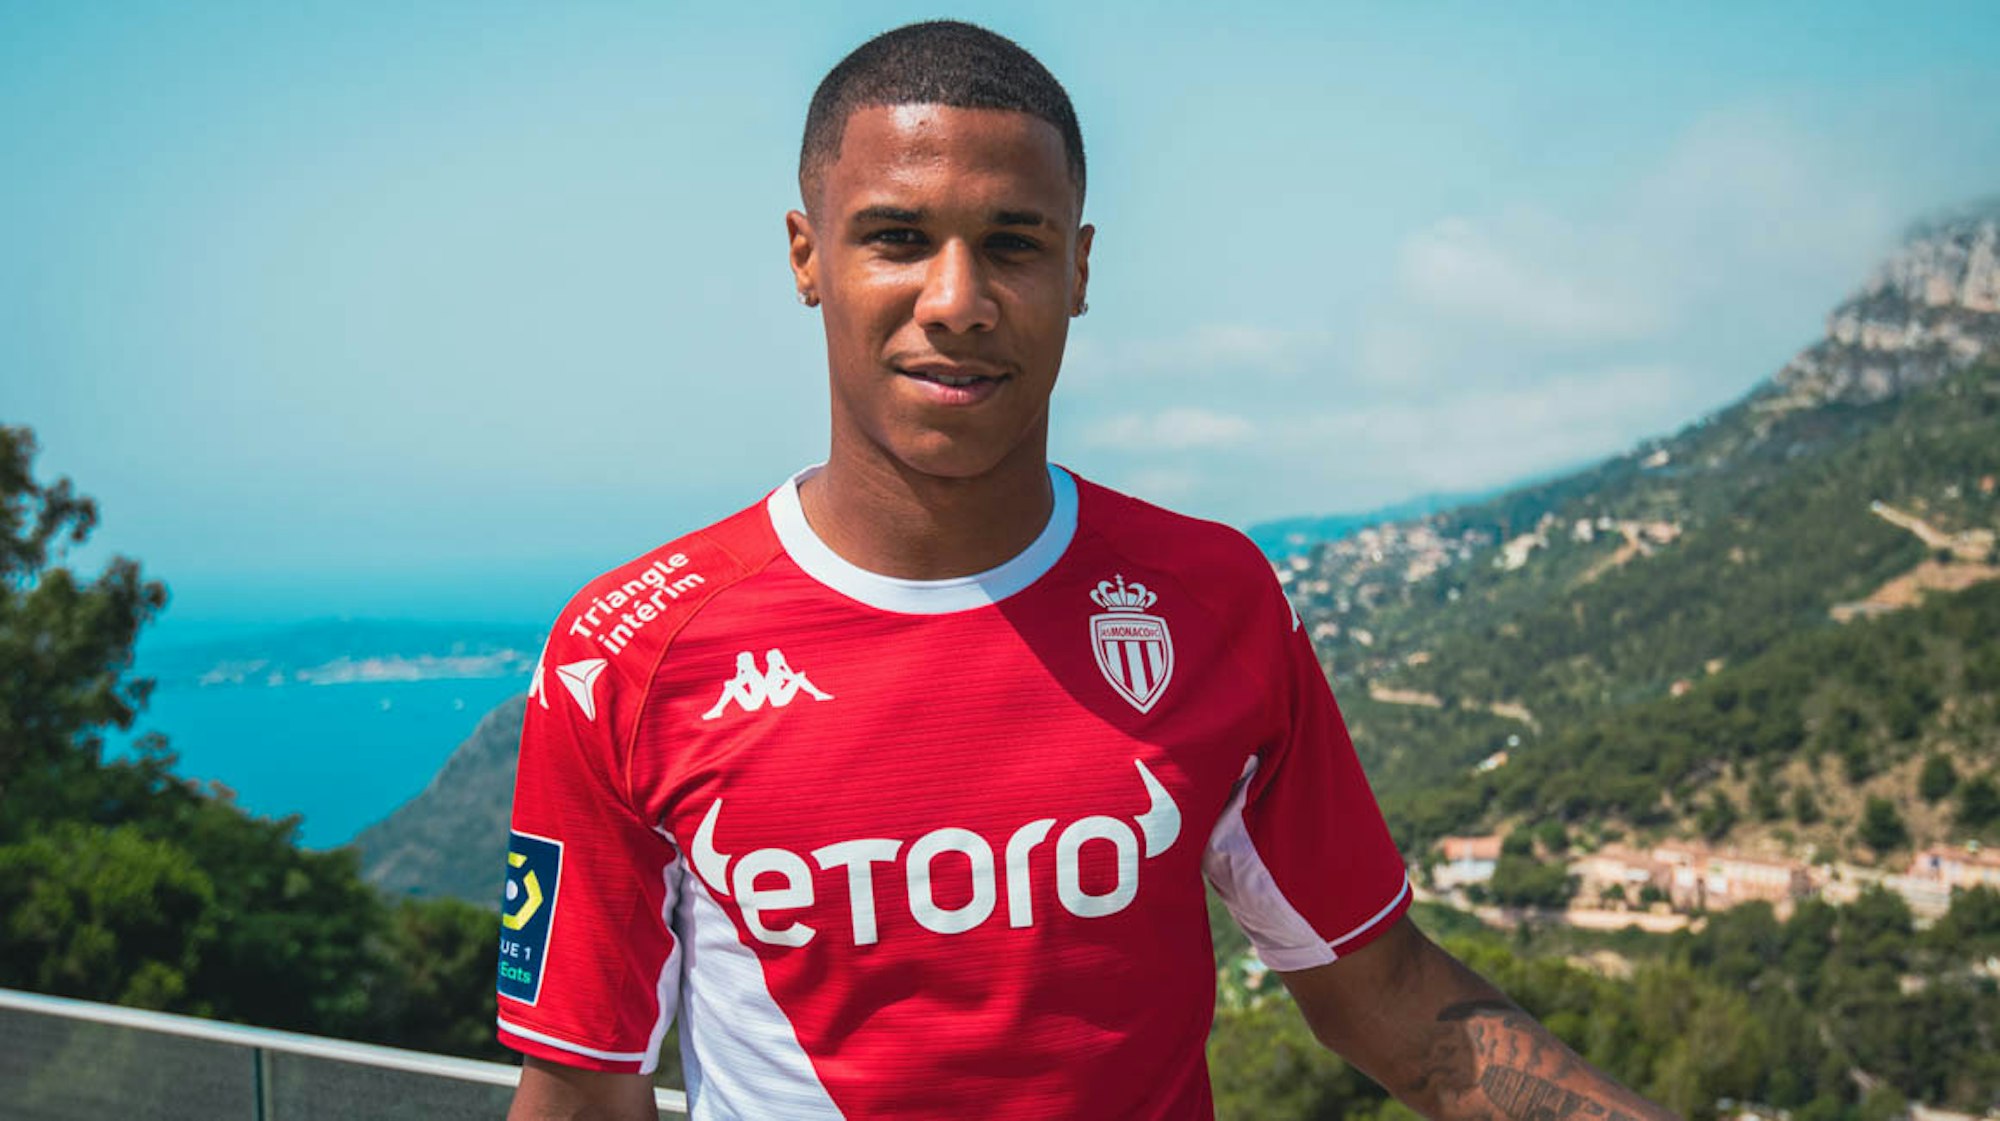 Ismail Jakobs trägt das Trikot der AS Monaco.